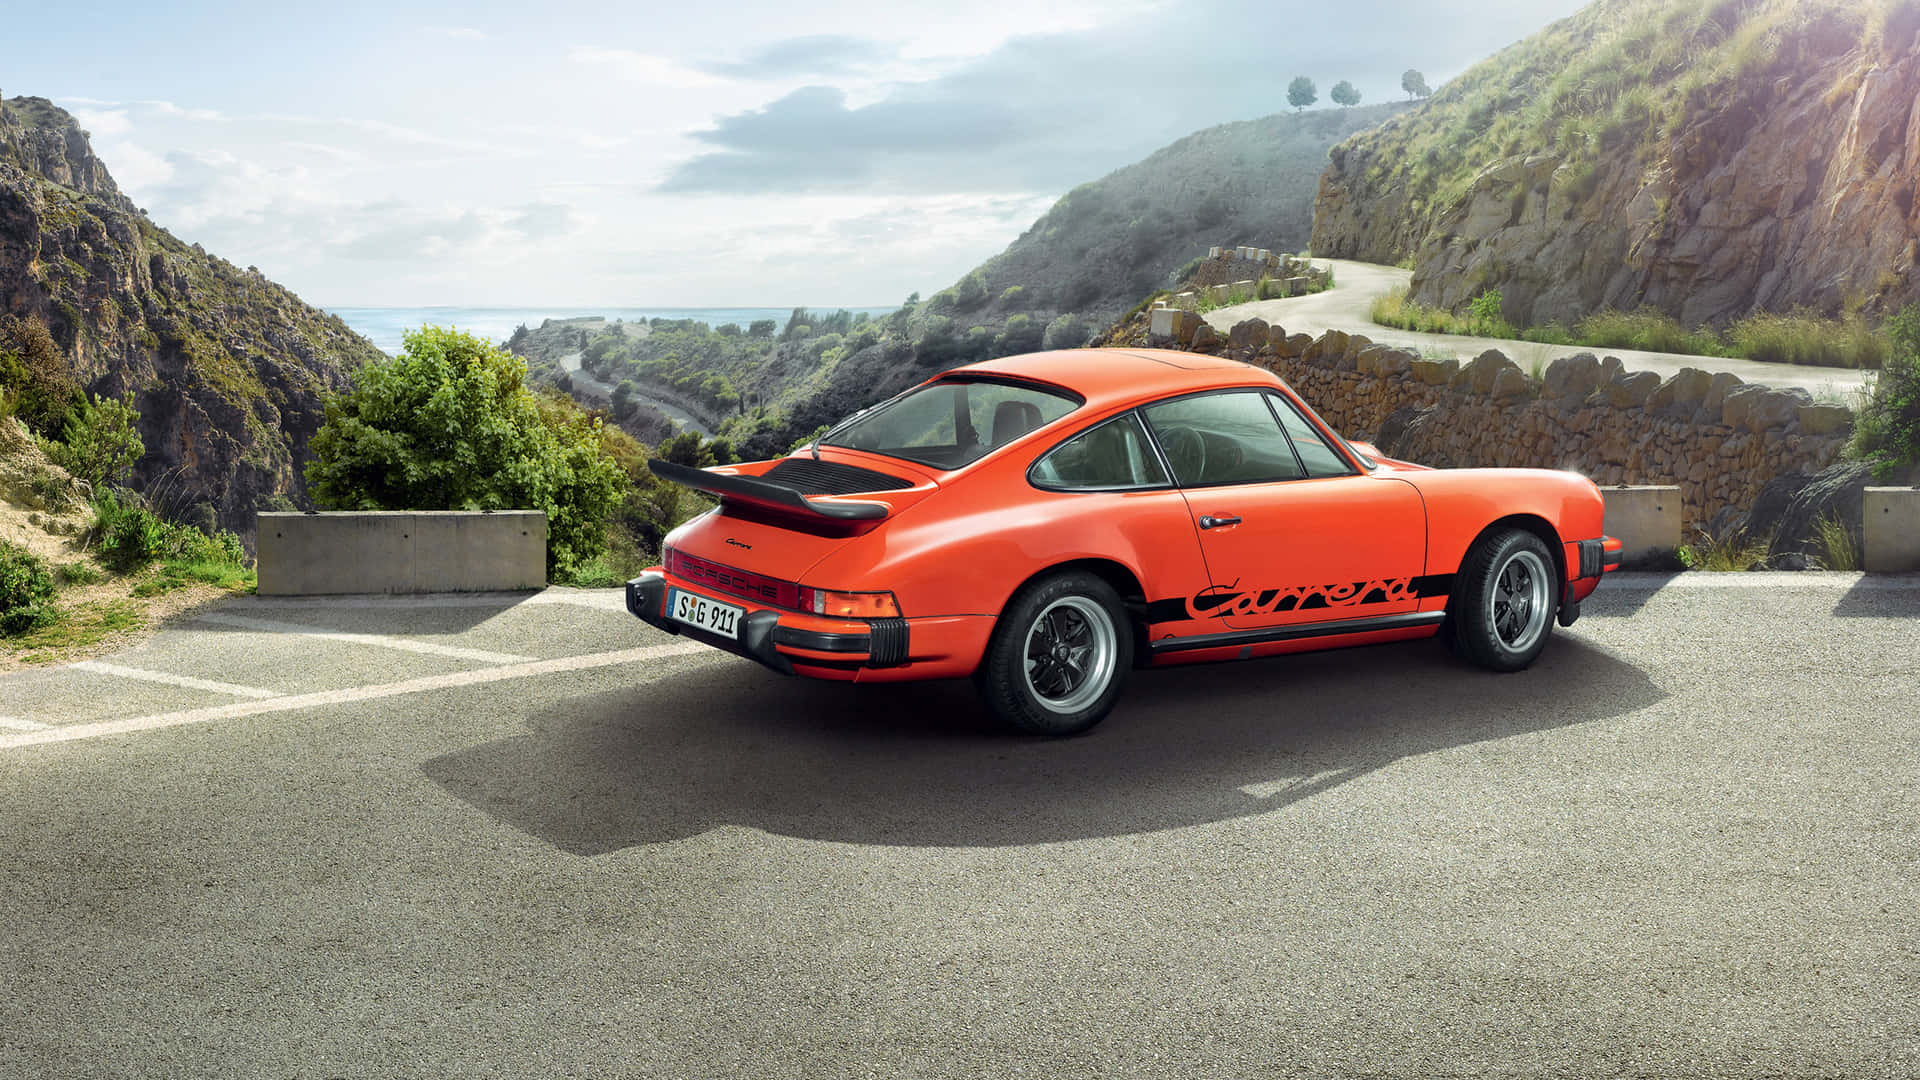 Explore The Beauty Of A 4k Ultra Hd Porsche Background